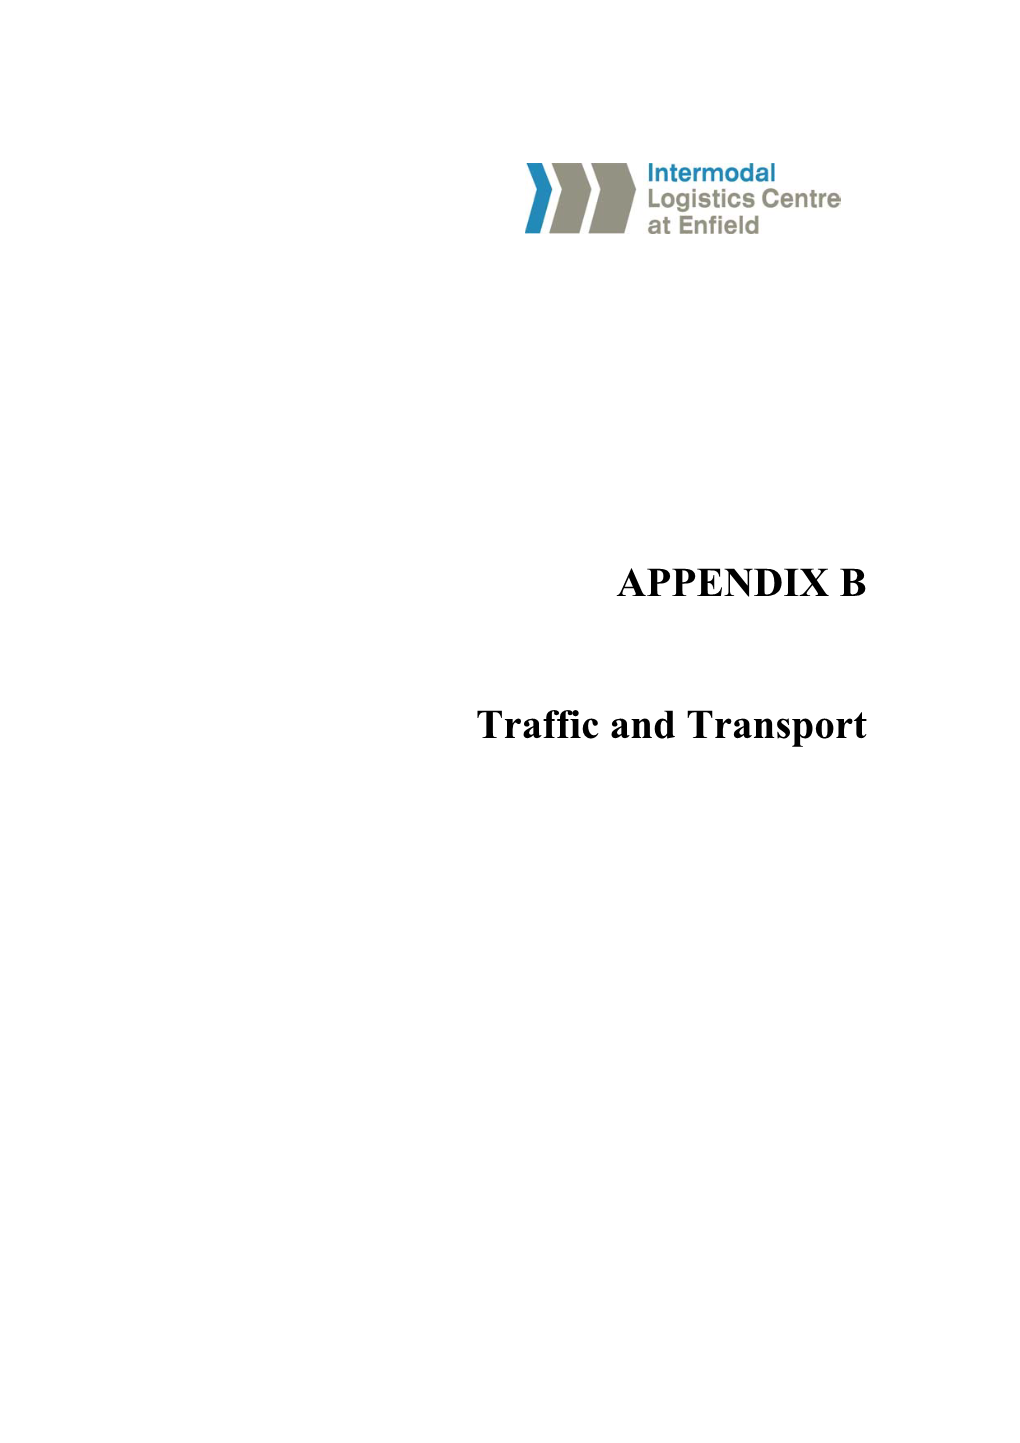 APPENDIX B Traffic and Transport